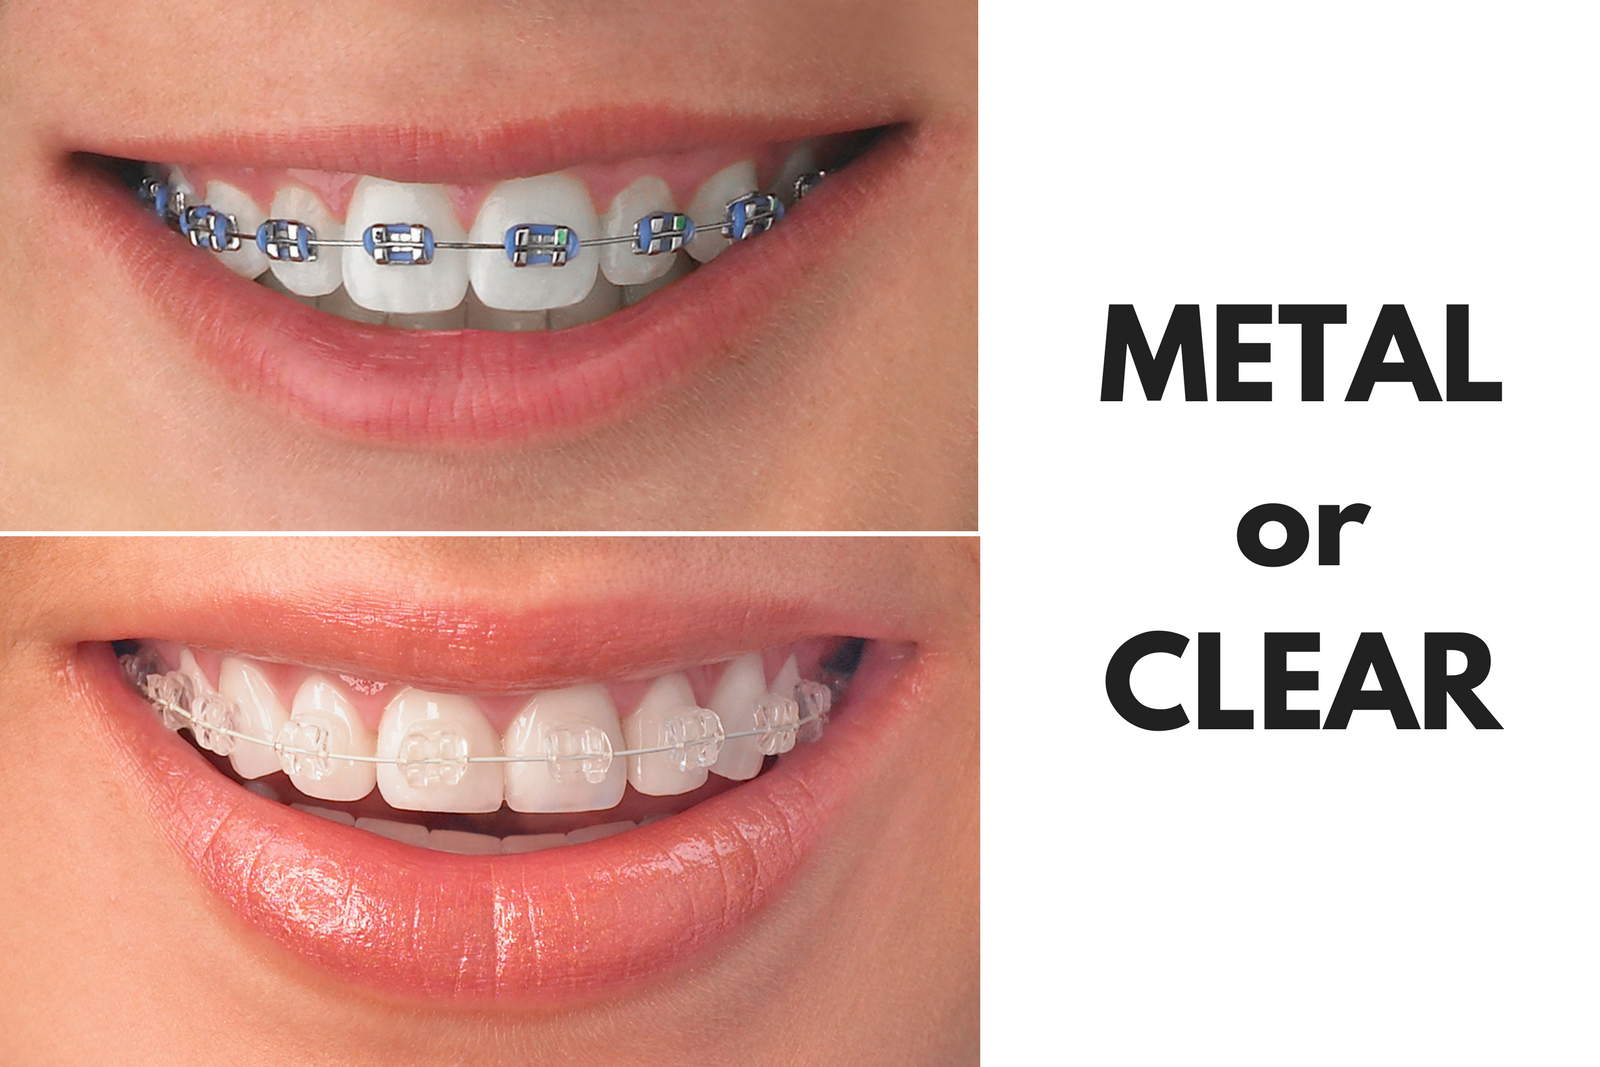 Ask Your Soldotna Dentist: Should I Get Metal or Clear Braces?